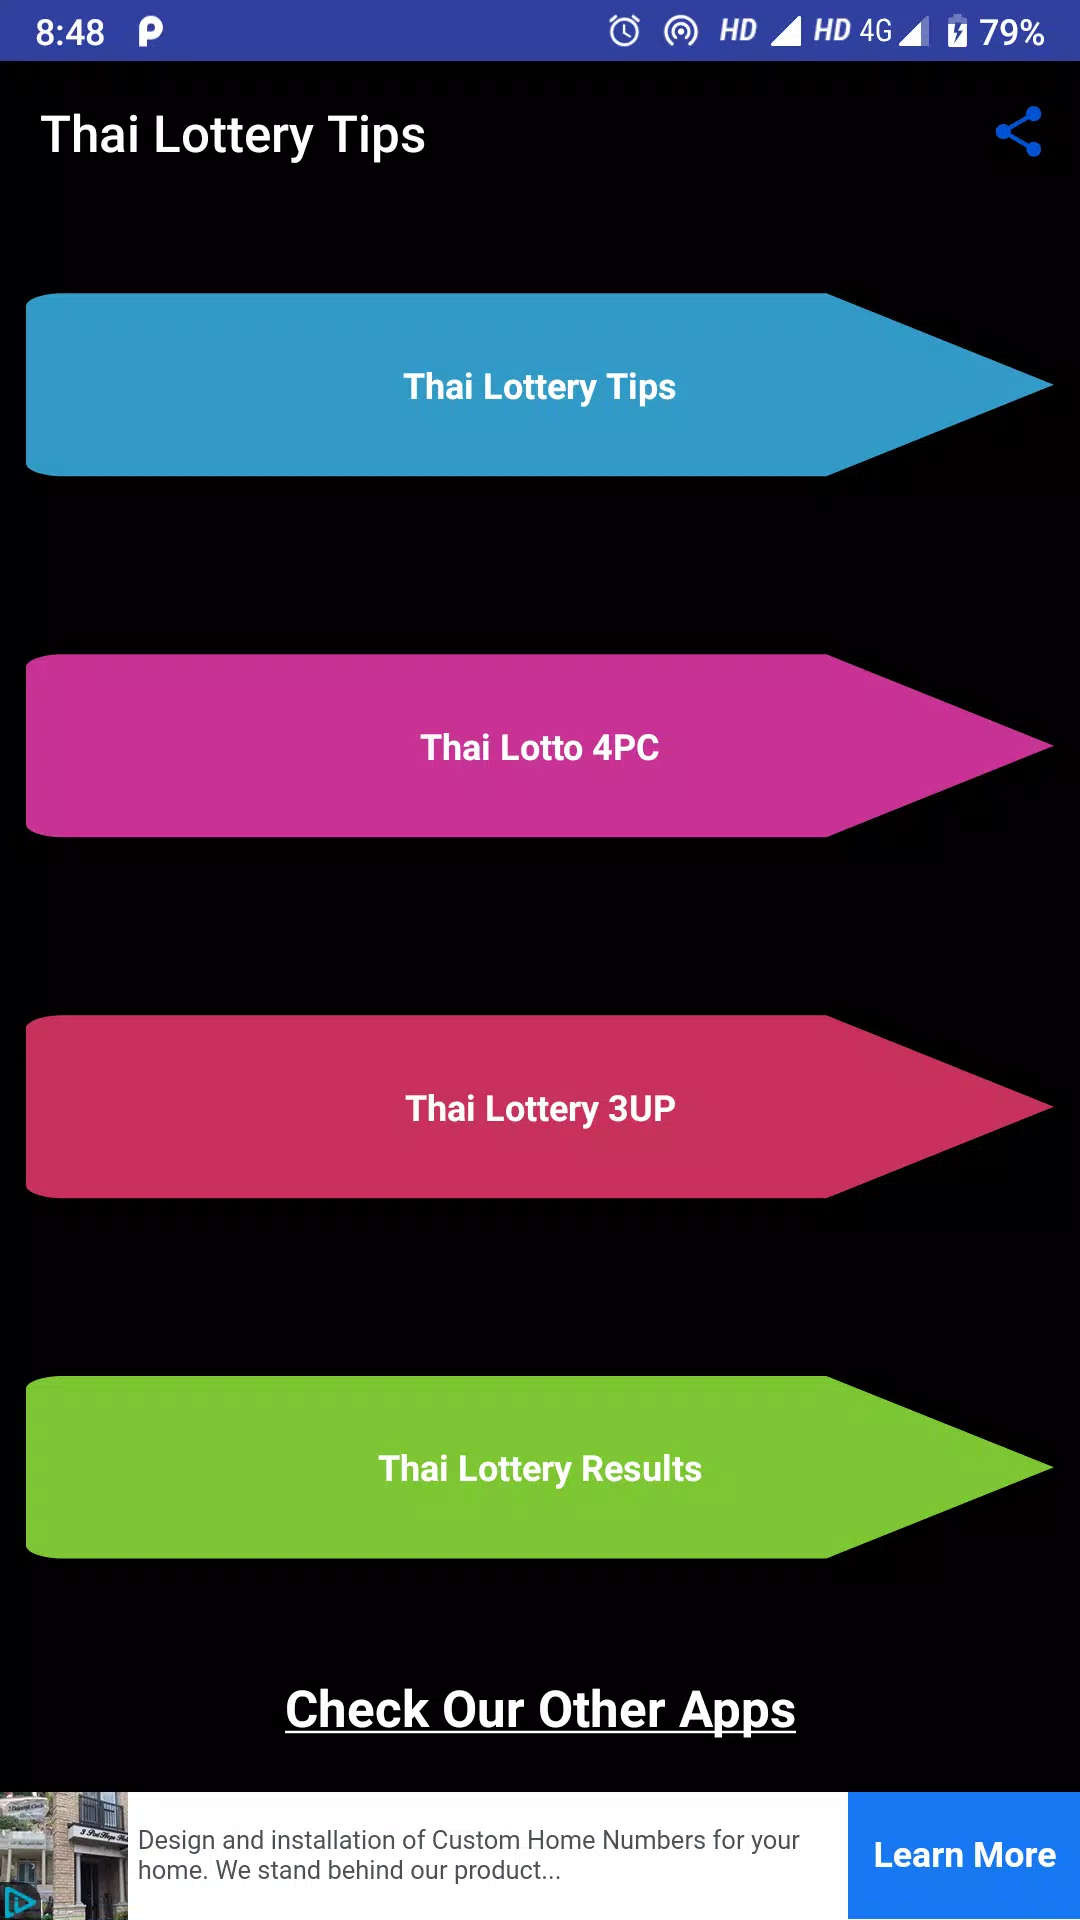 Thailand lottery win tips 2014